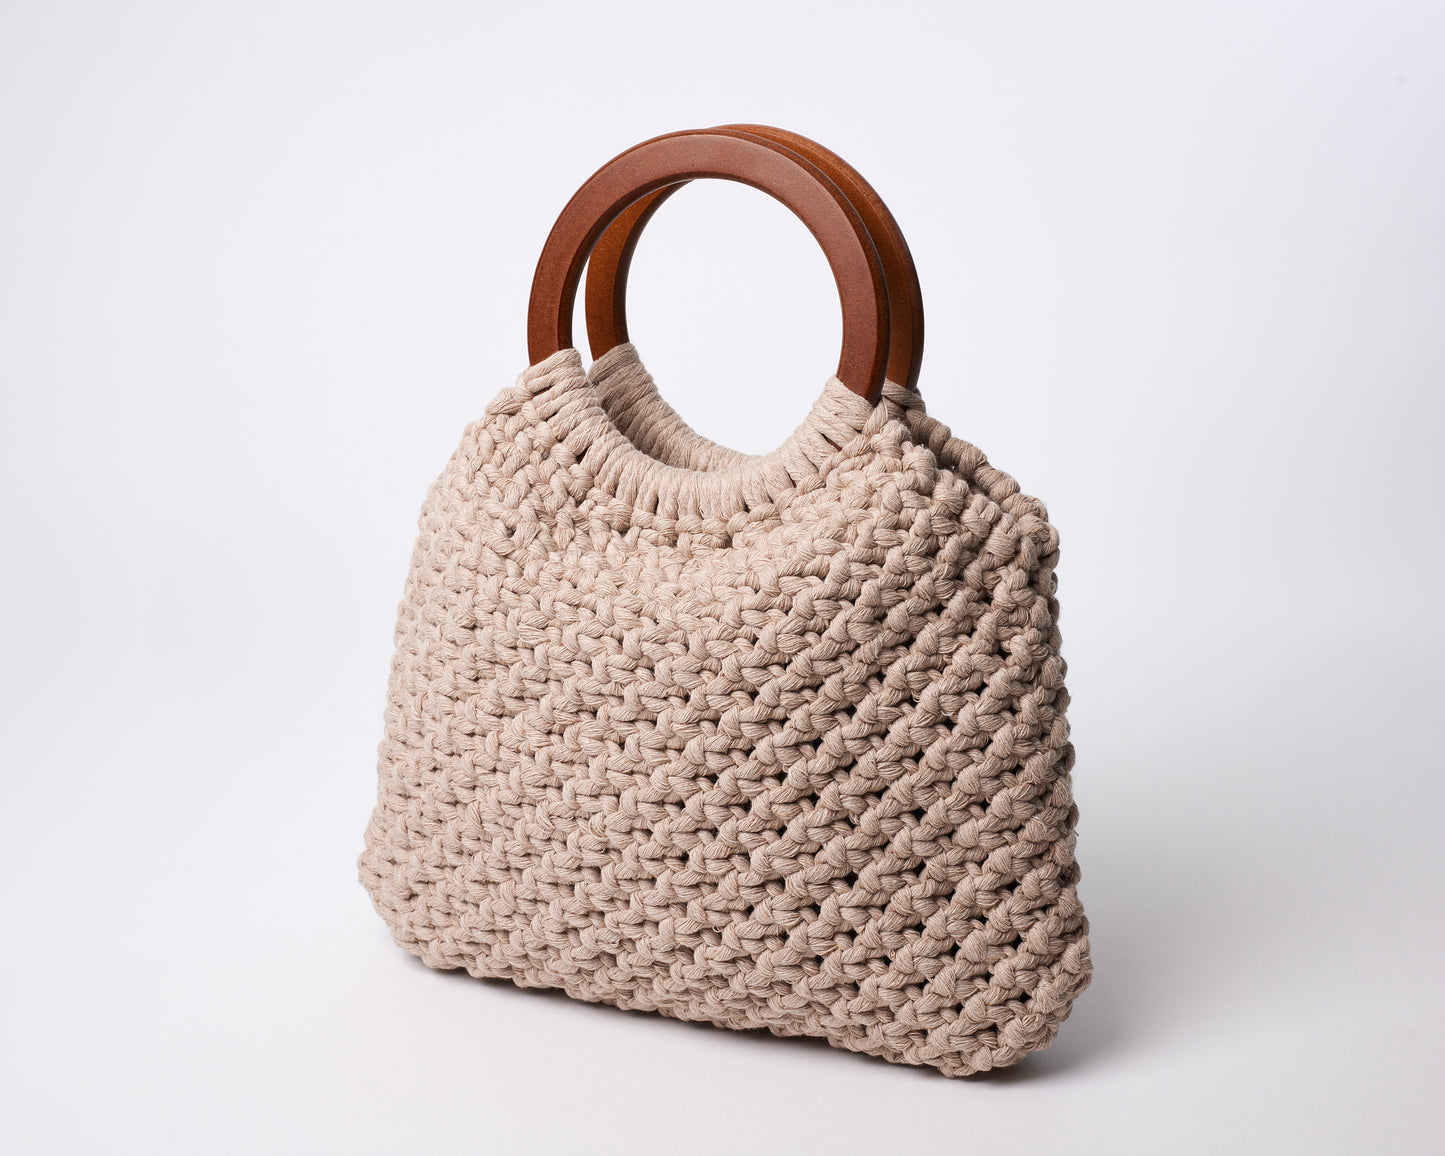 Handmade macrame purse with wood handle